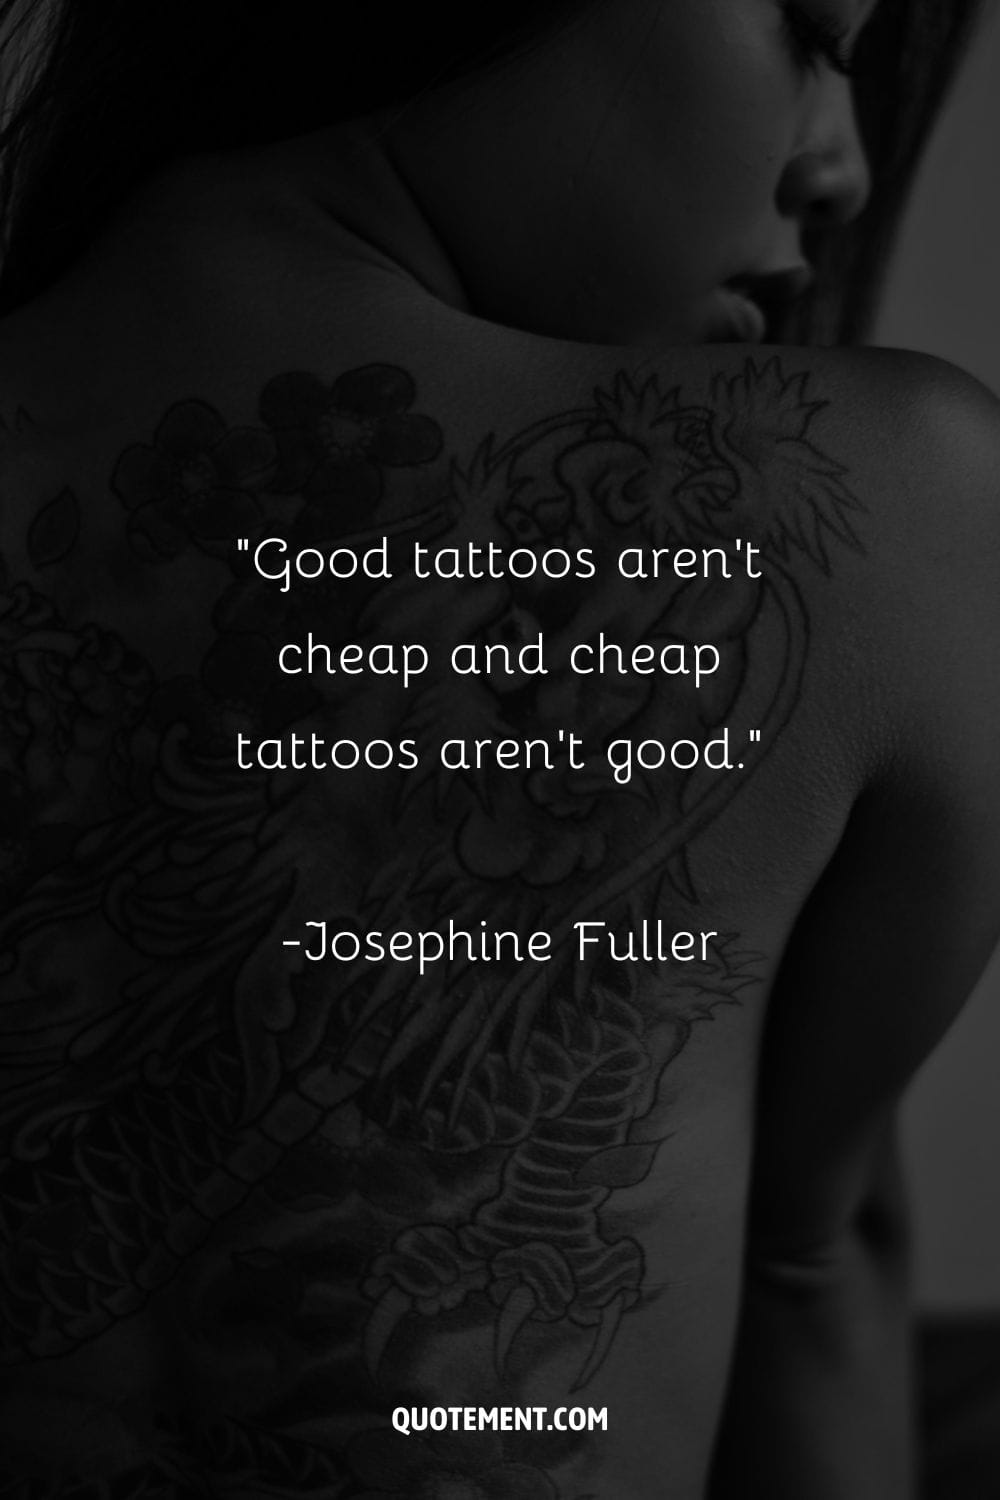 intricate tattoos adorn a black woman's back